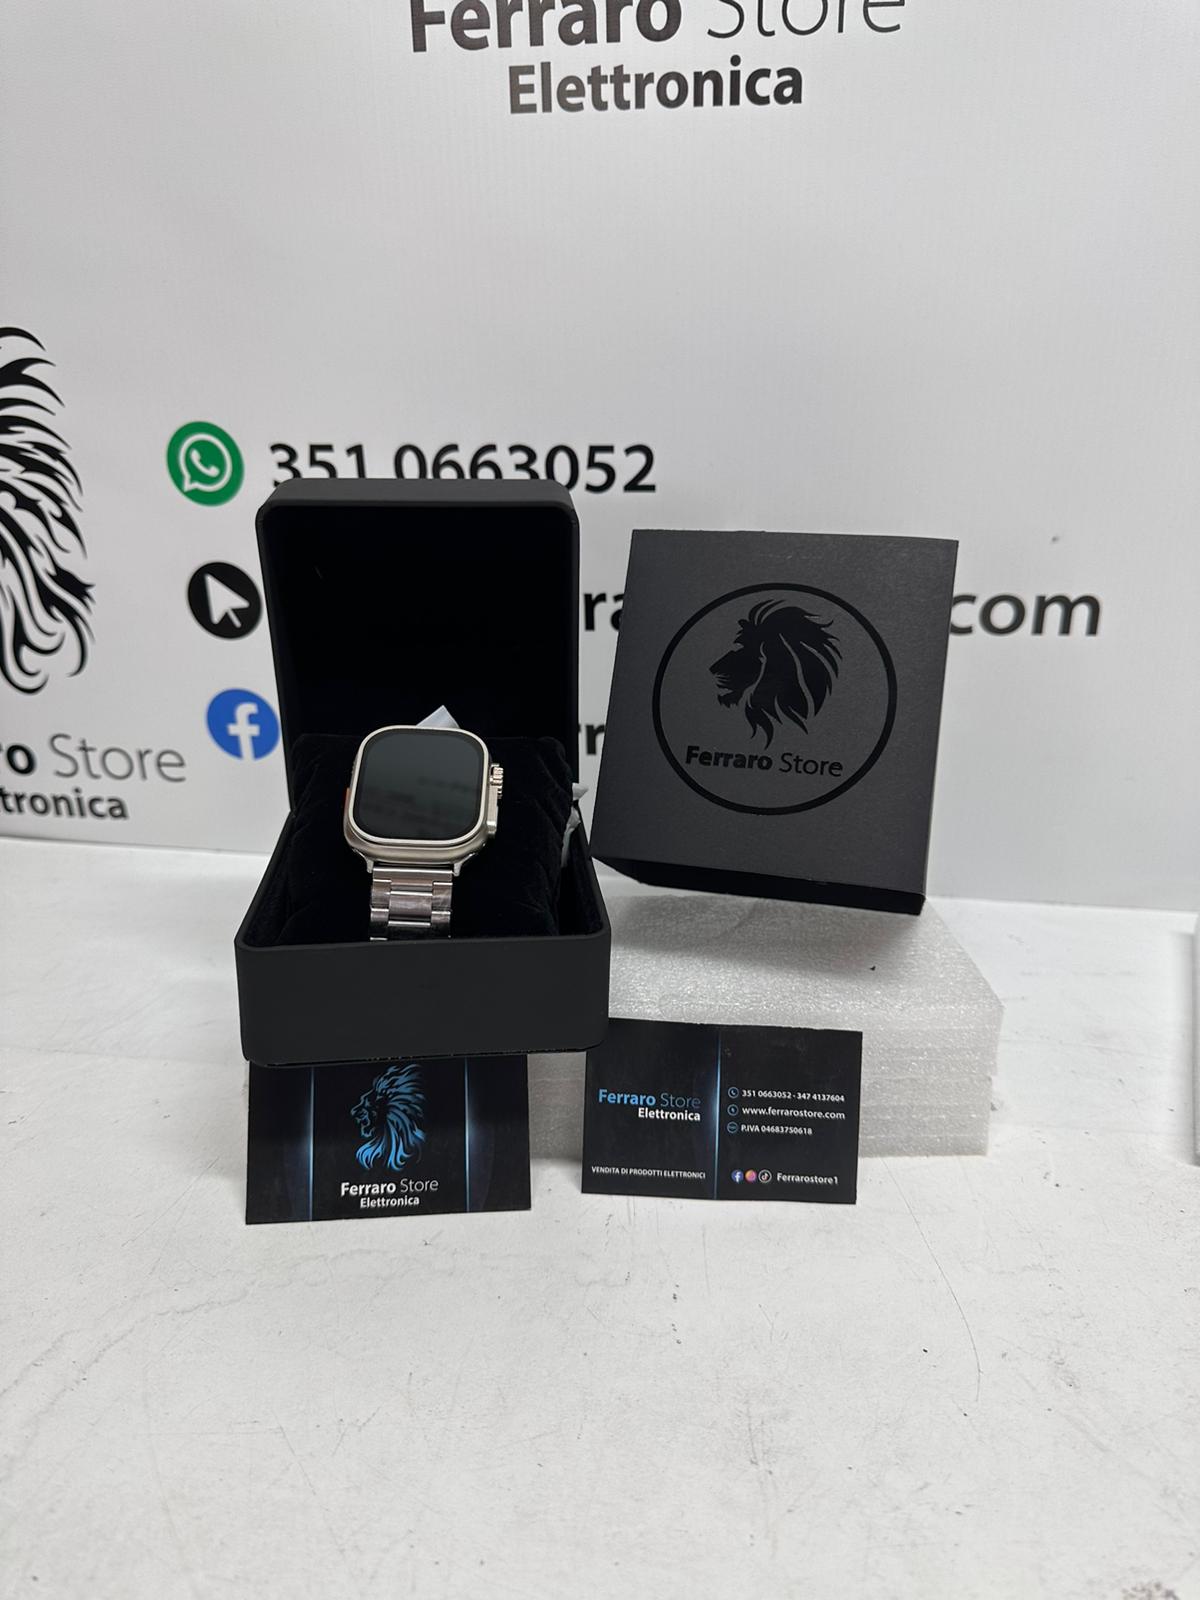 Smartwatch ULTRA 49mm - Bluetooth , Call, NFC, Rubrica, Notifiche, Cinturino